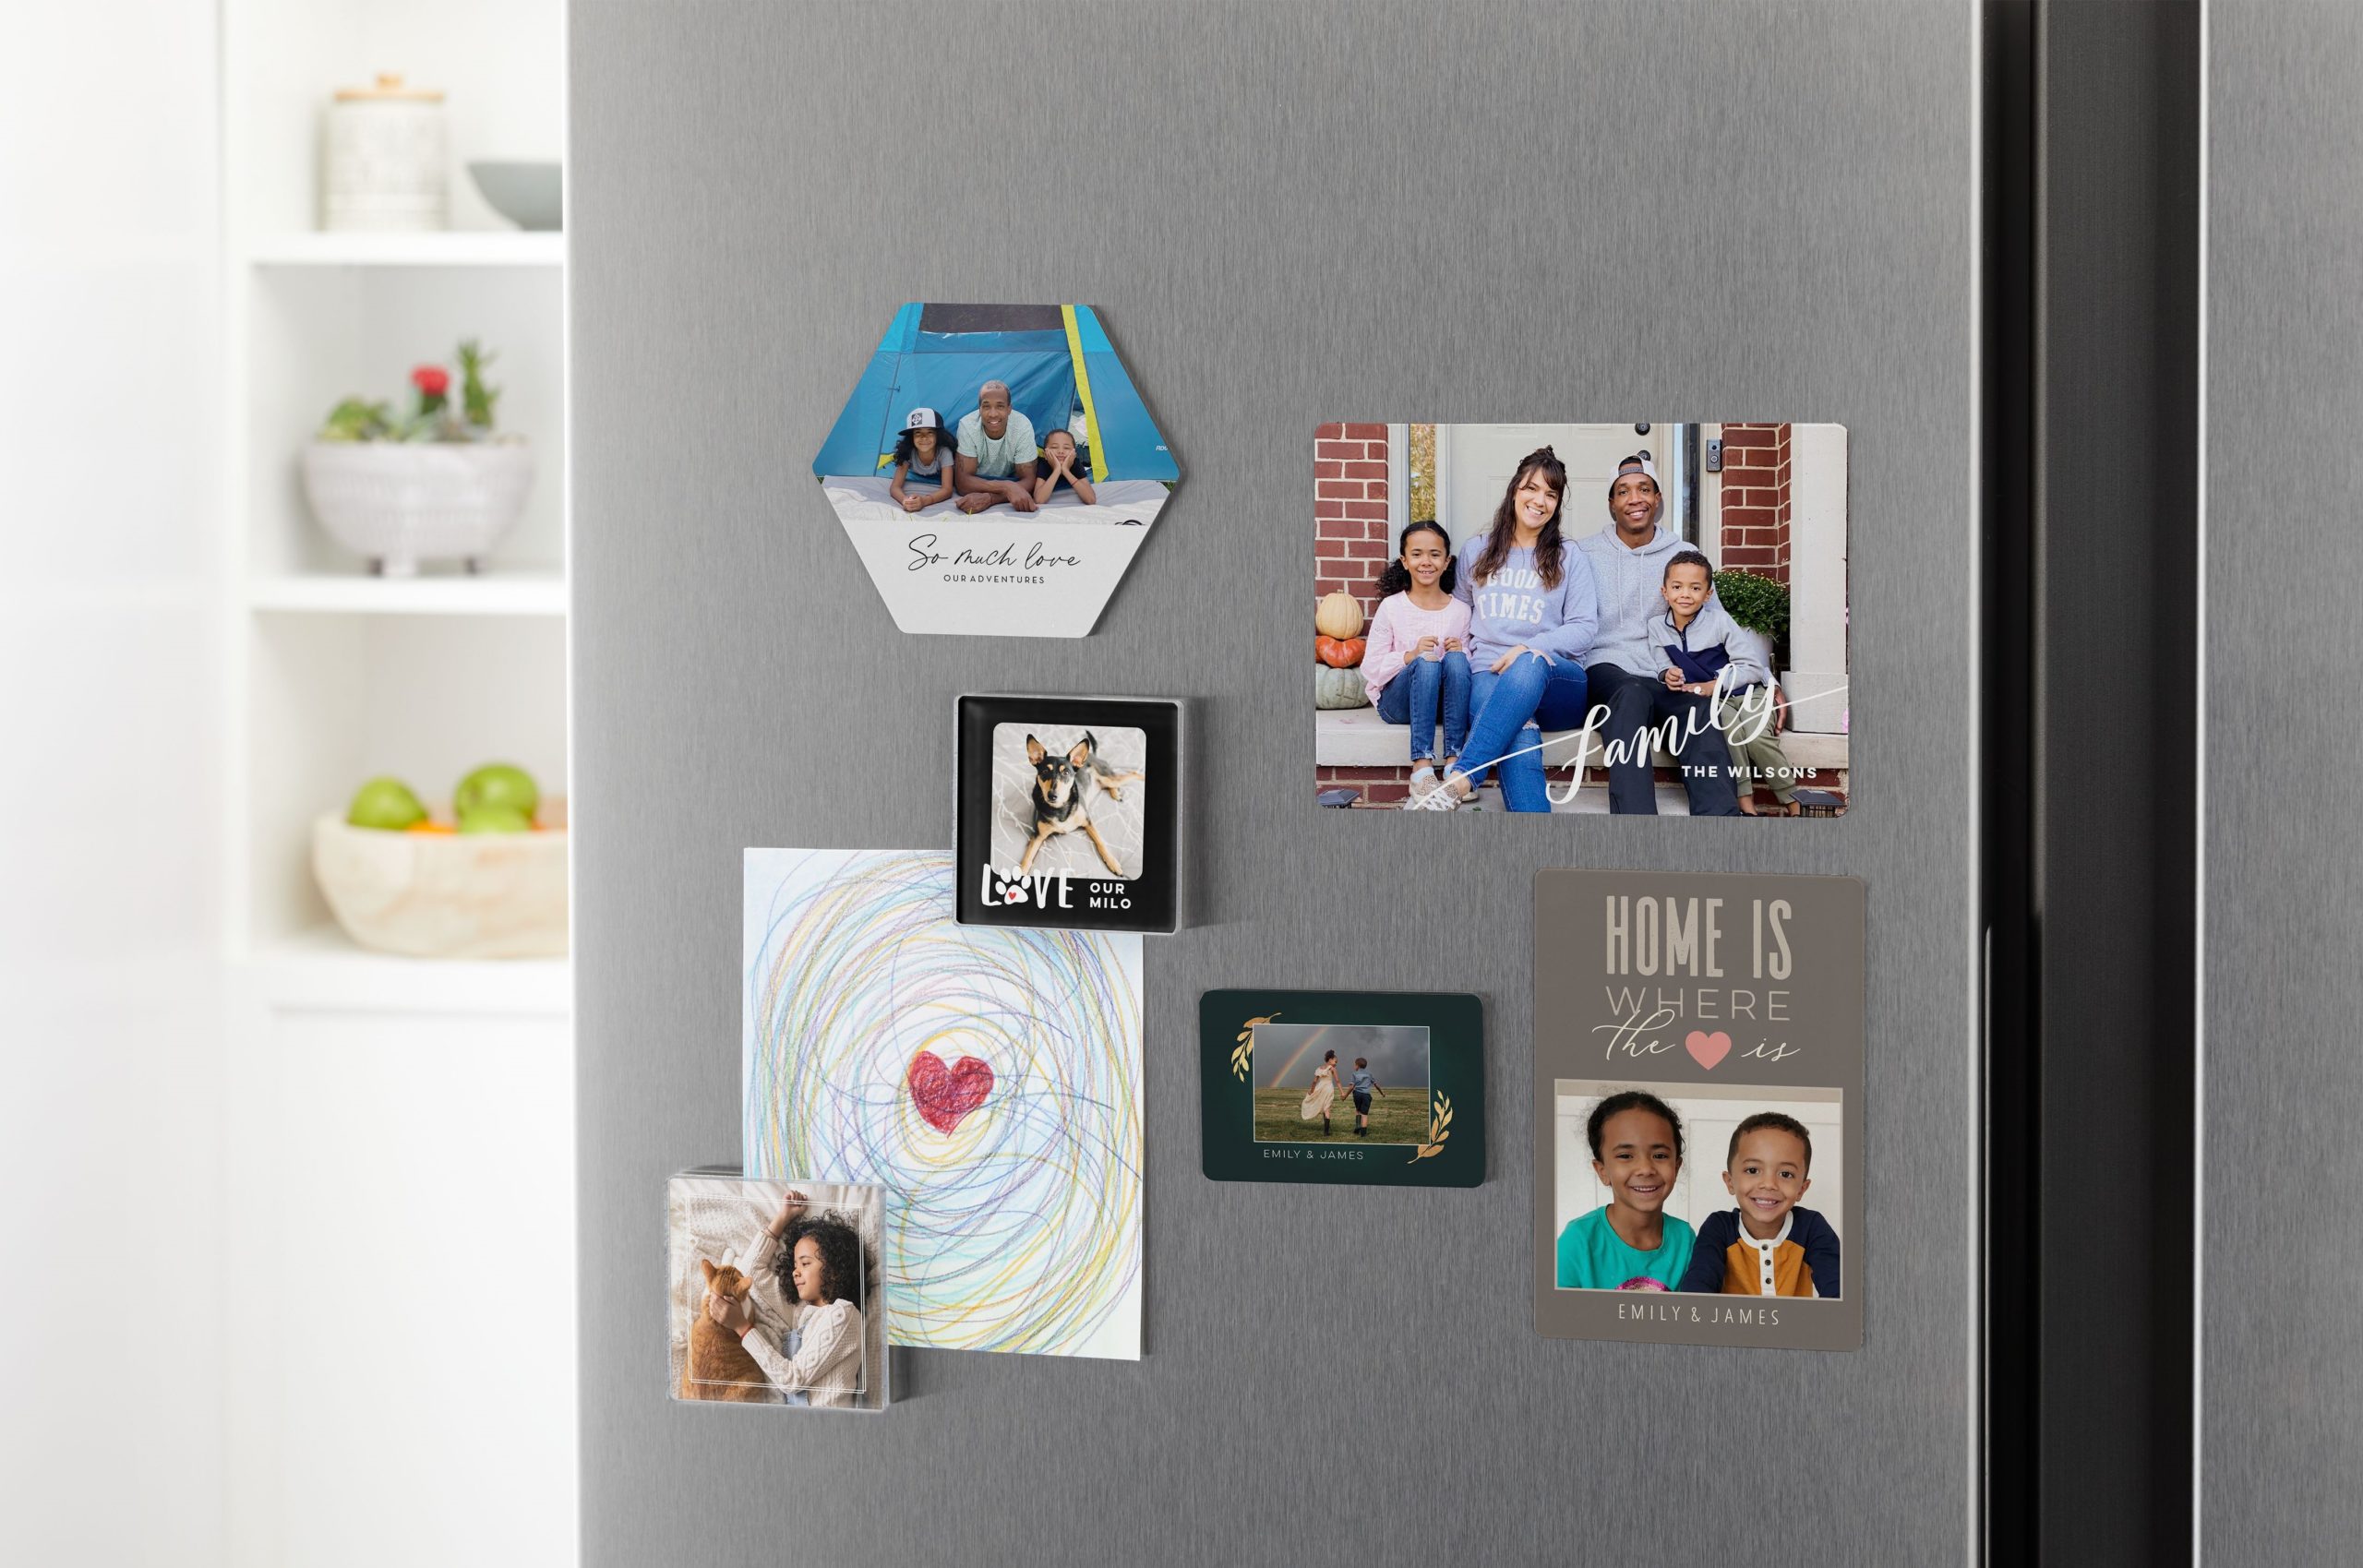 Custom photo magnets on a refrigerator